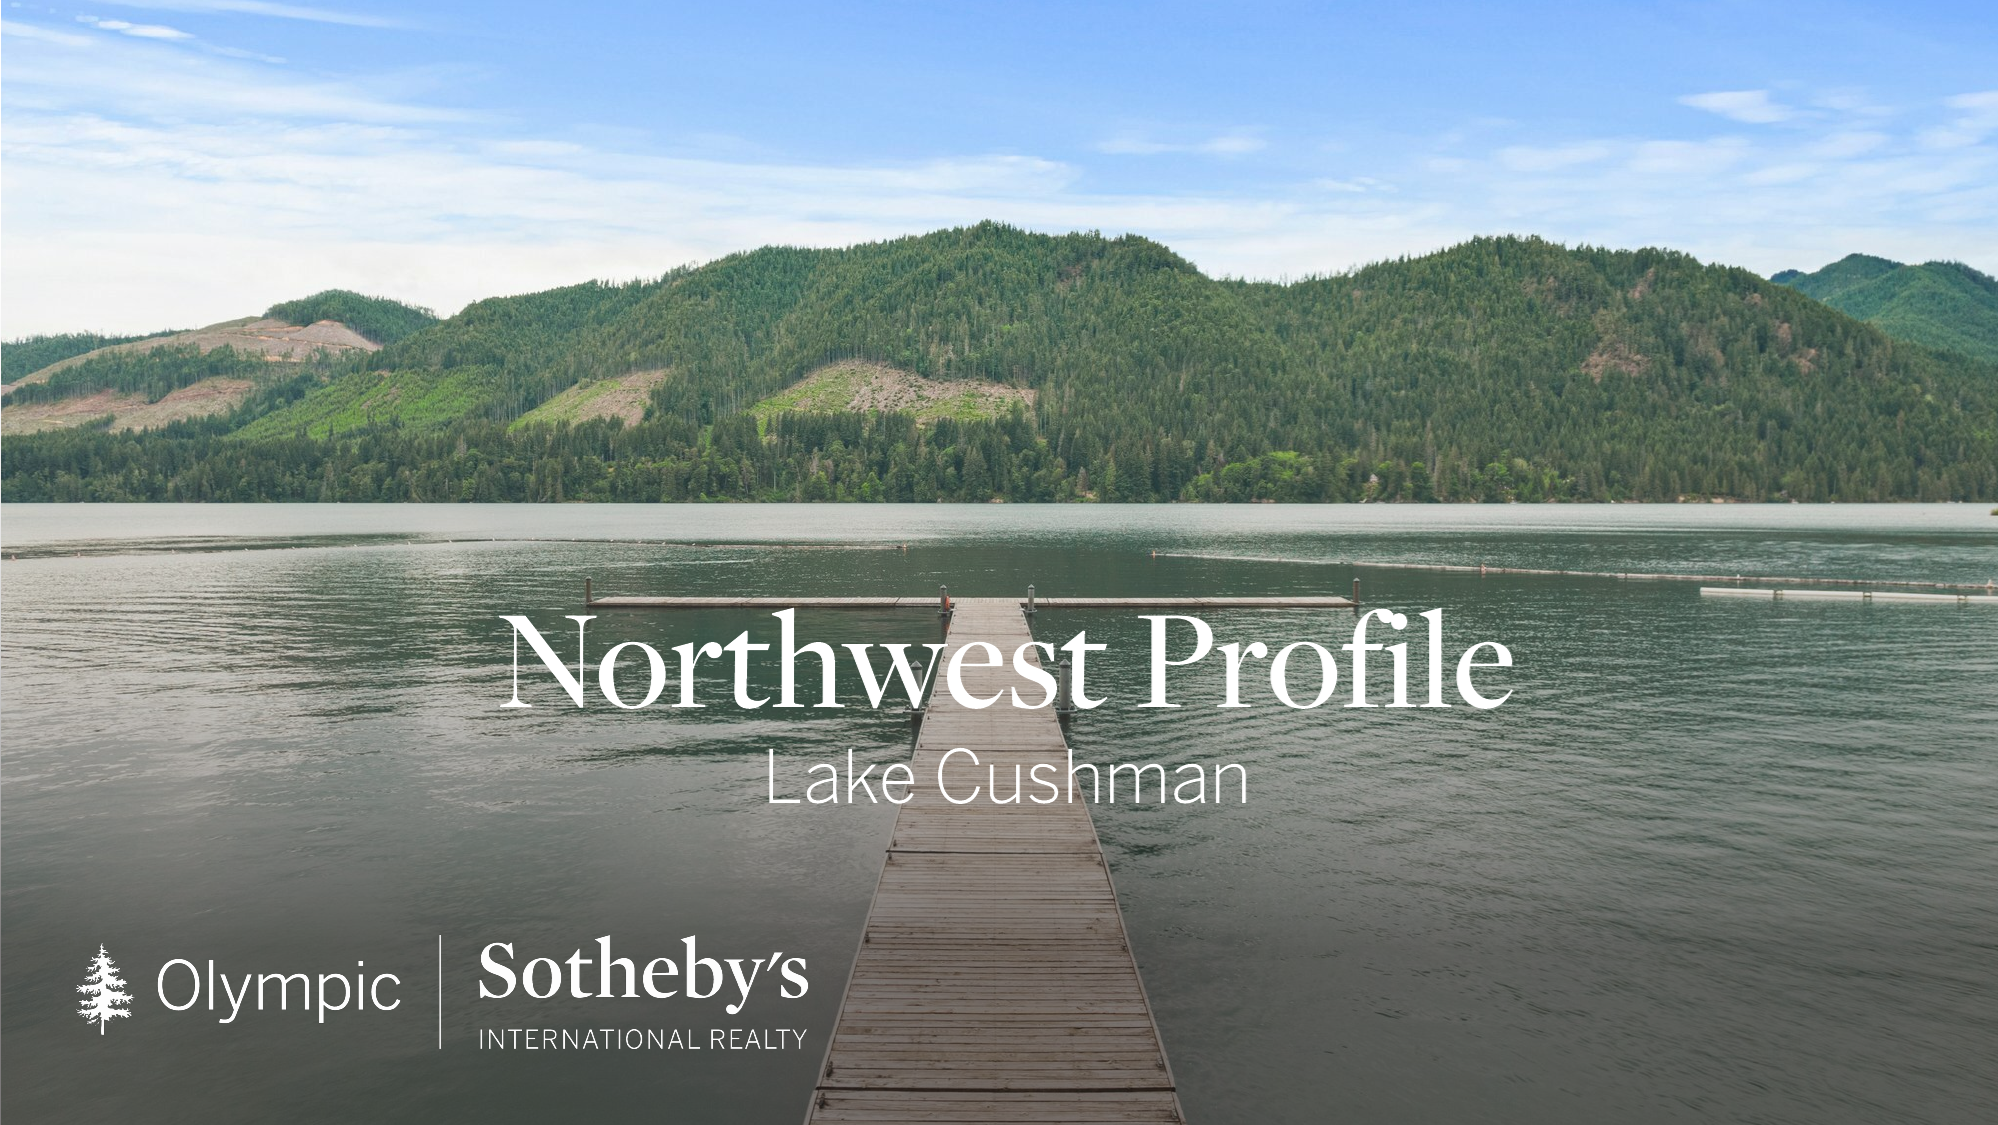 Northwest Profile: Lake Cushman